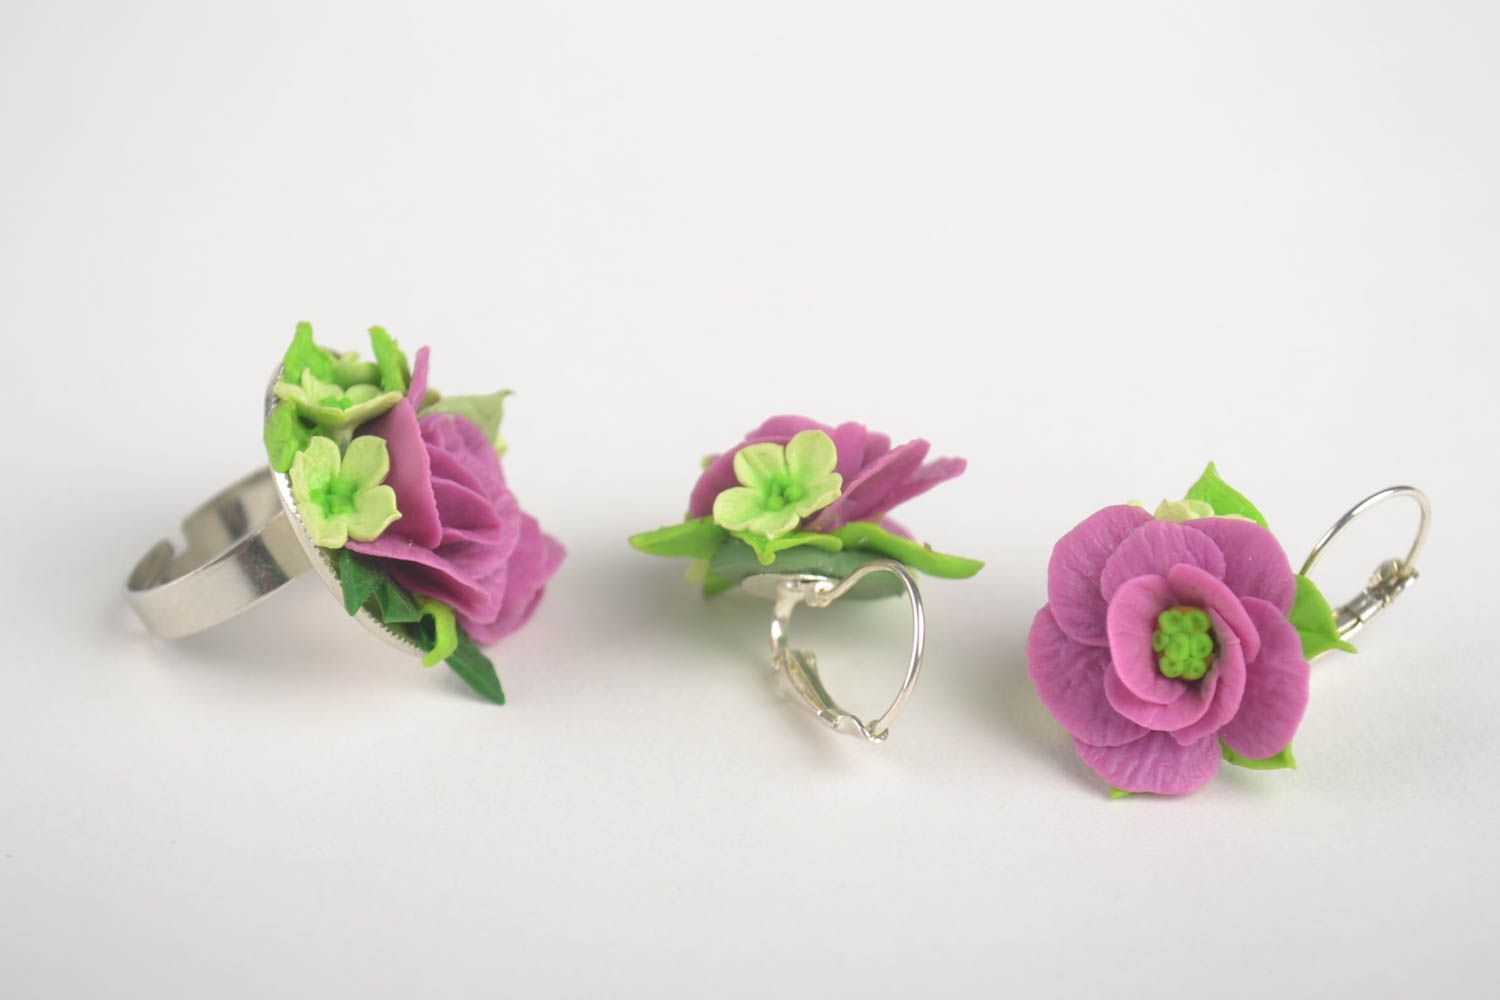 Handmade earrings handmade ring polymer clay jewelry set of accessory gift ideas photo 3